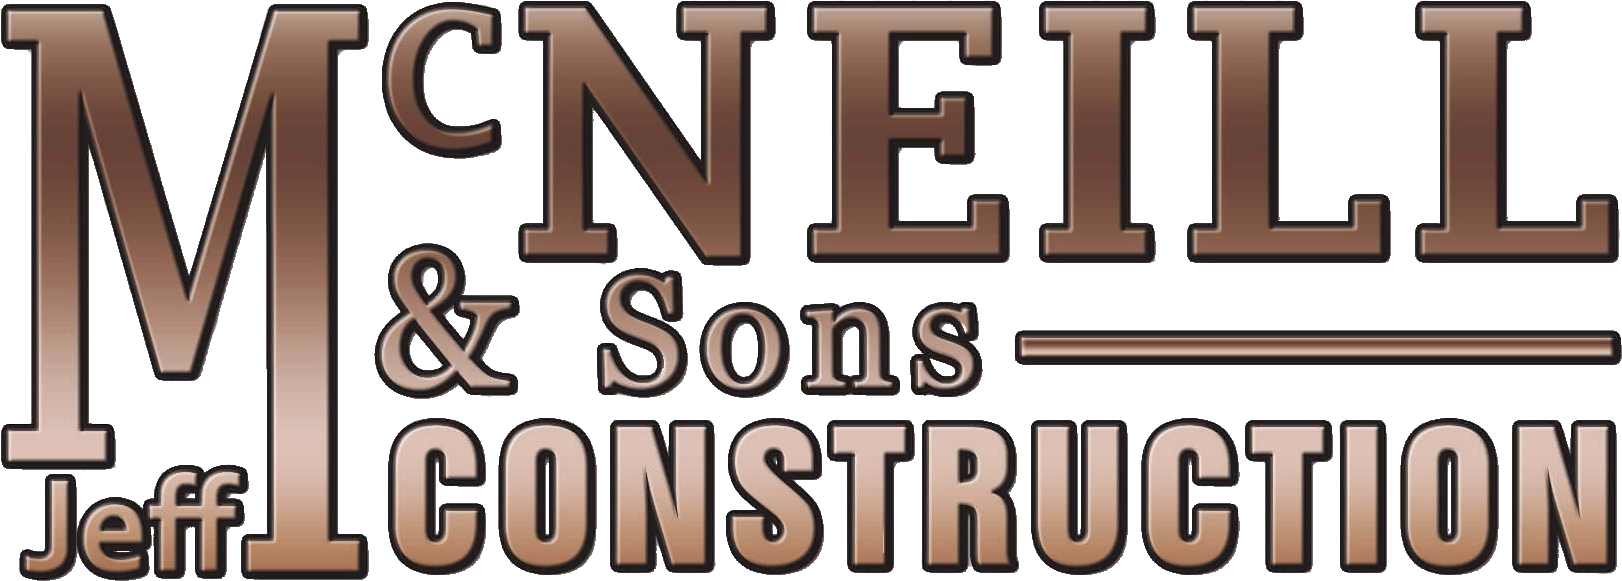 Jeff McNeill & Sons Construction, Inc.